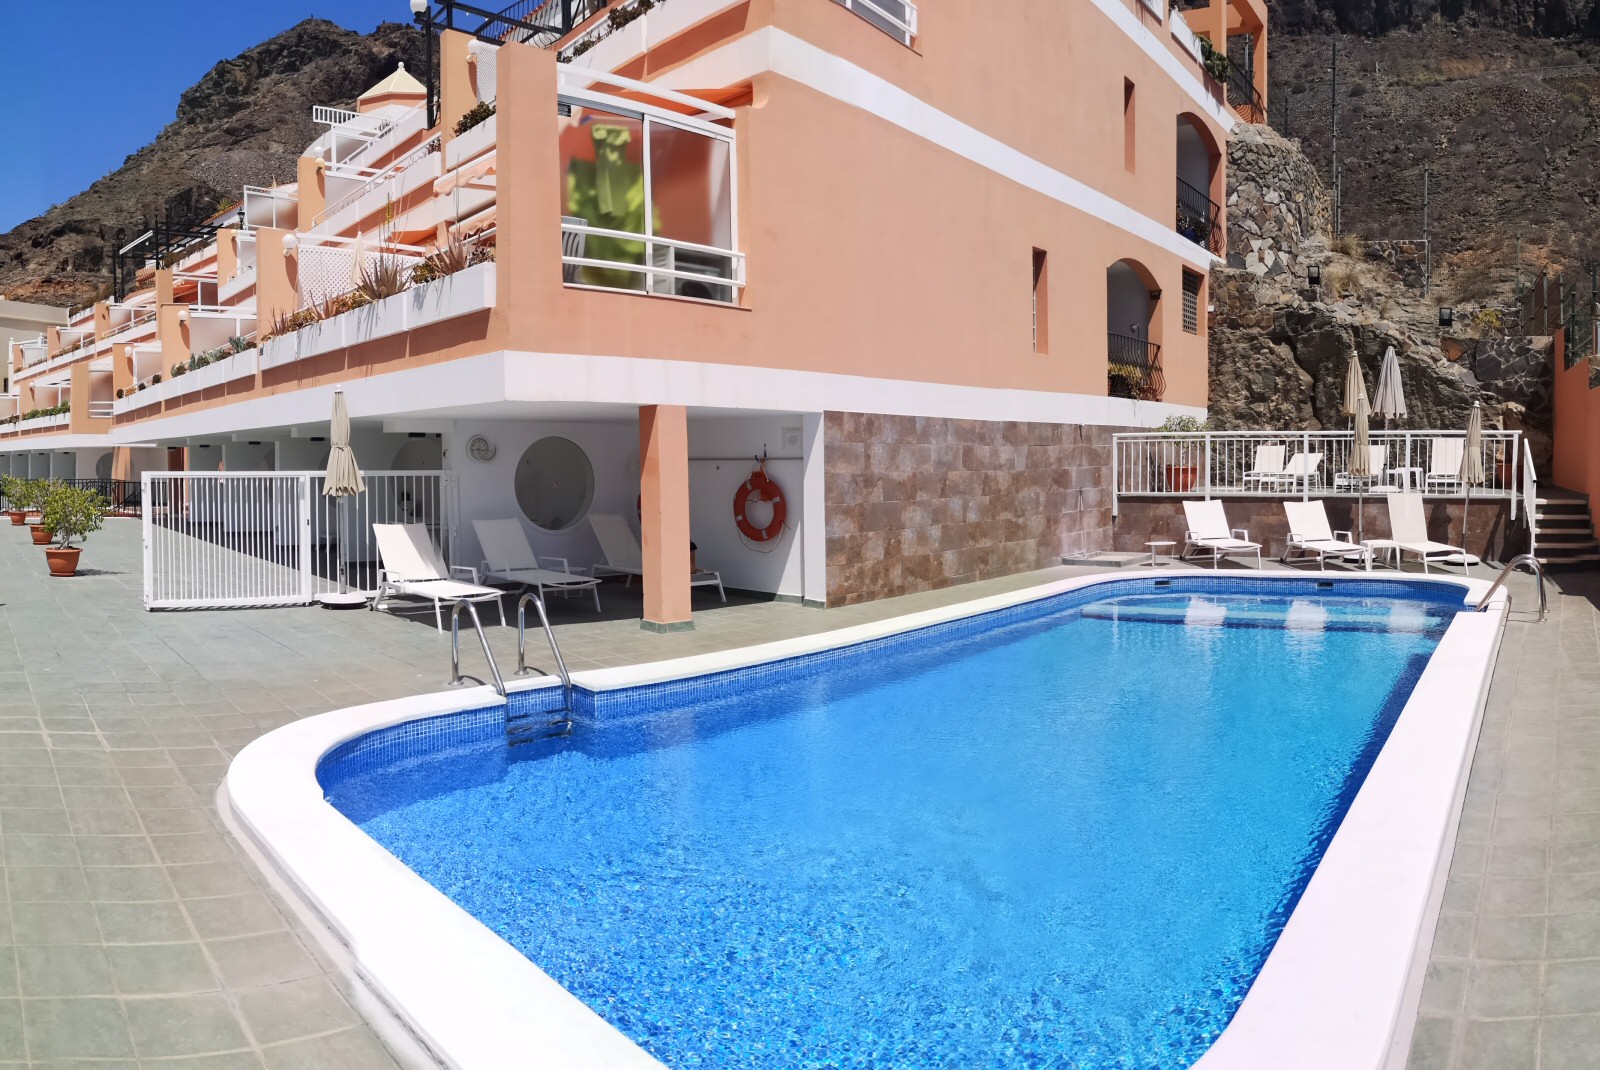 Apartment P - swimming pool